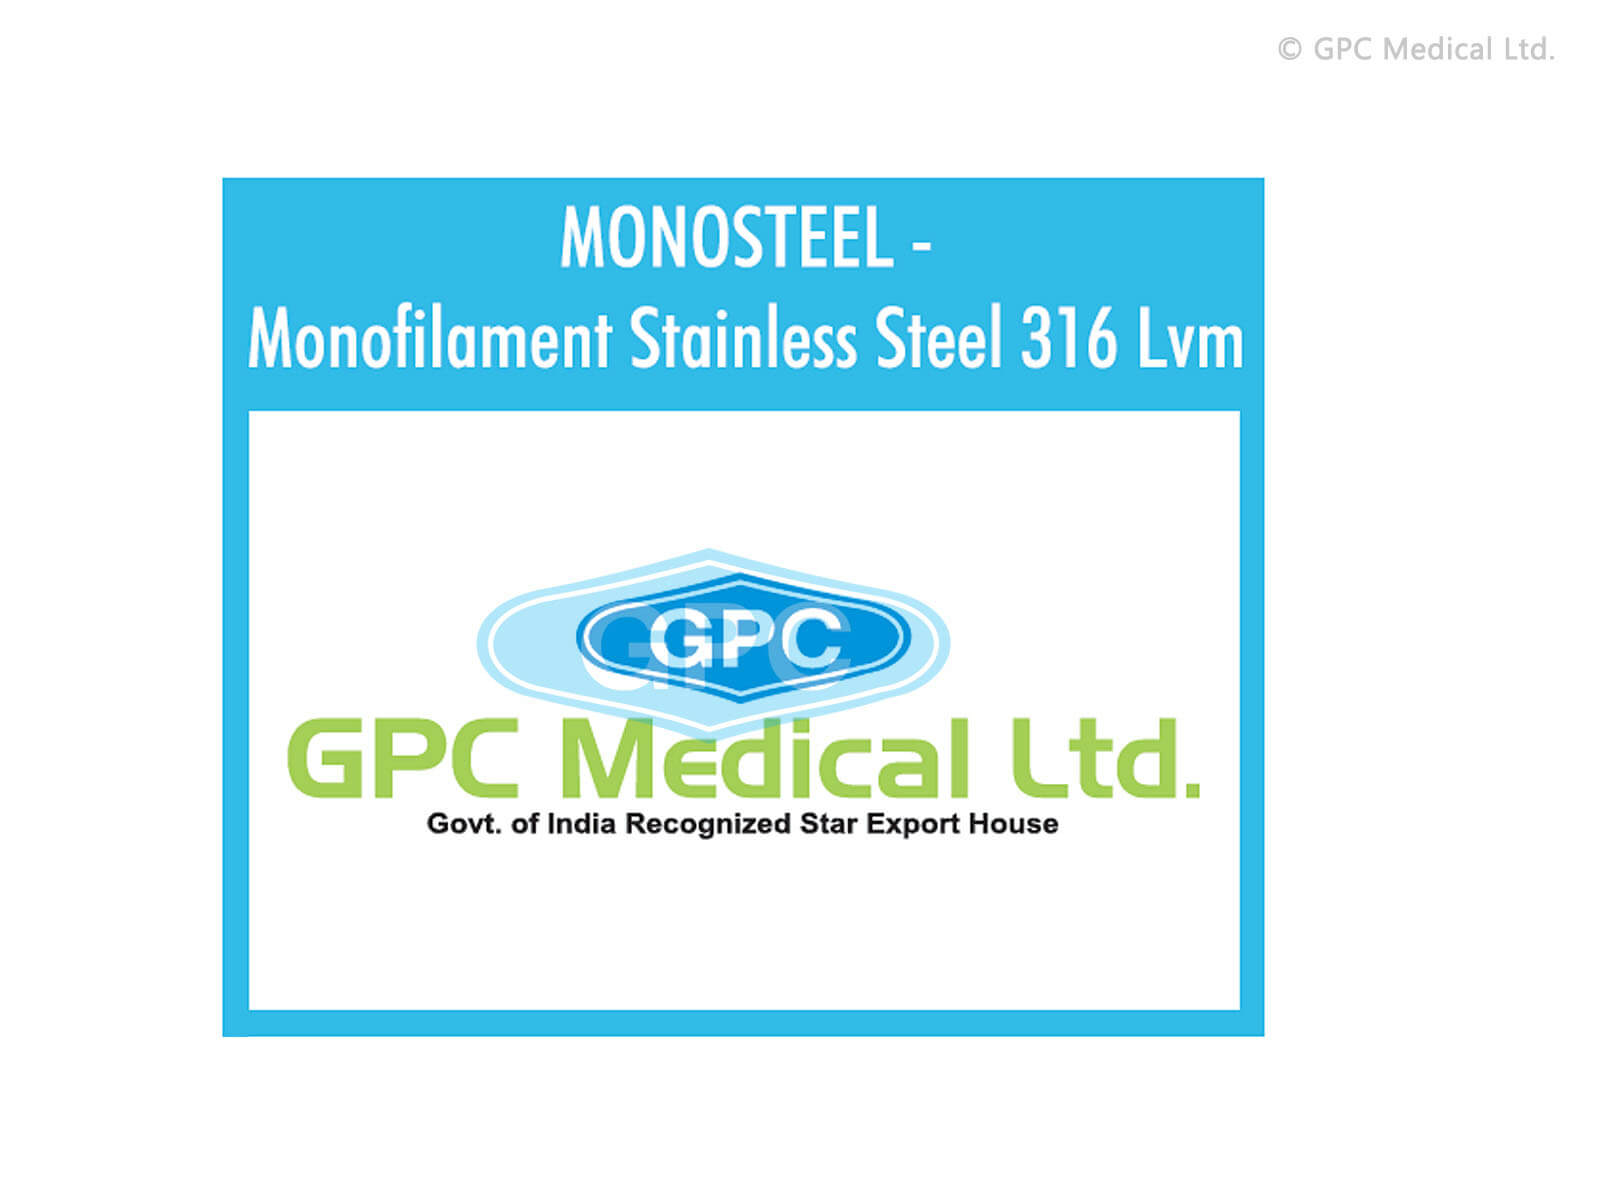 GPCMONOSTEEL - Monofilament Stainless Steel 316 Lvm